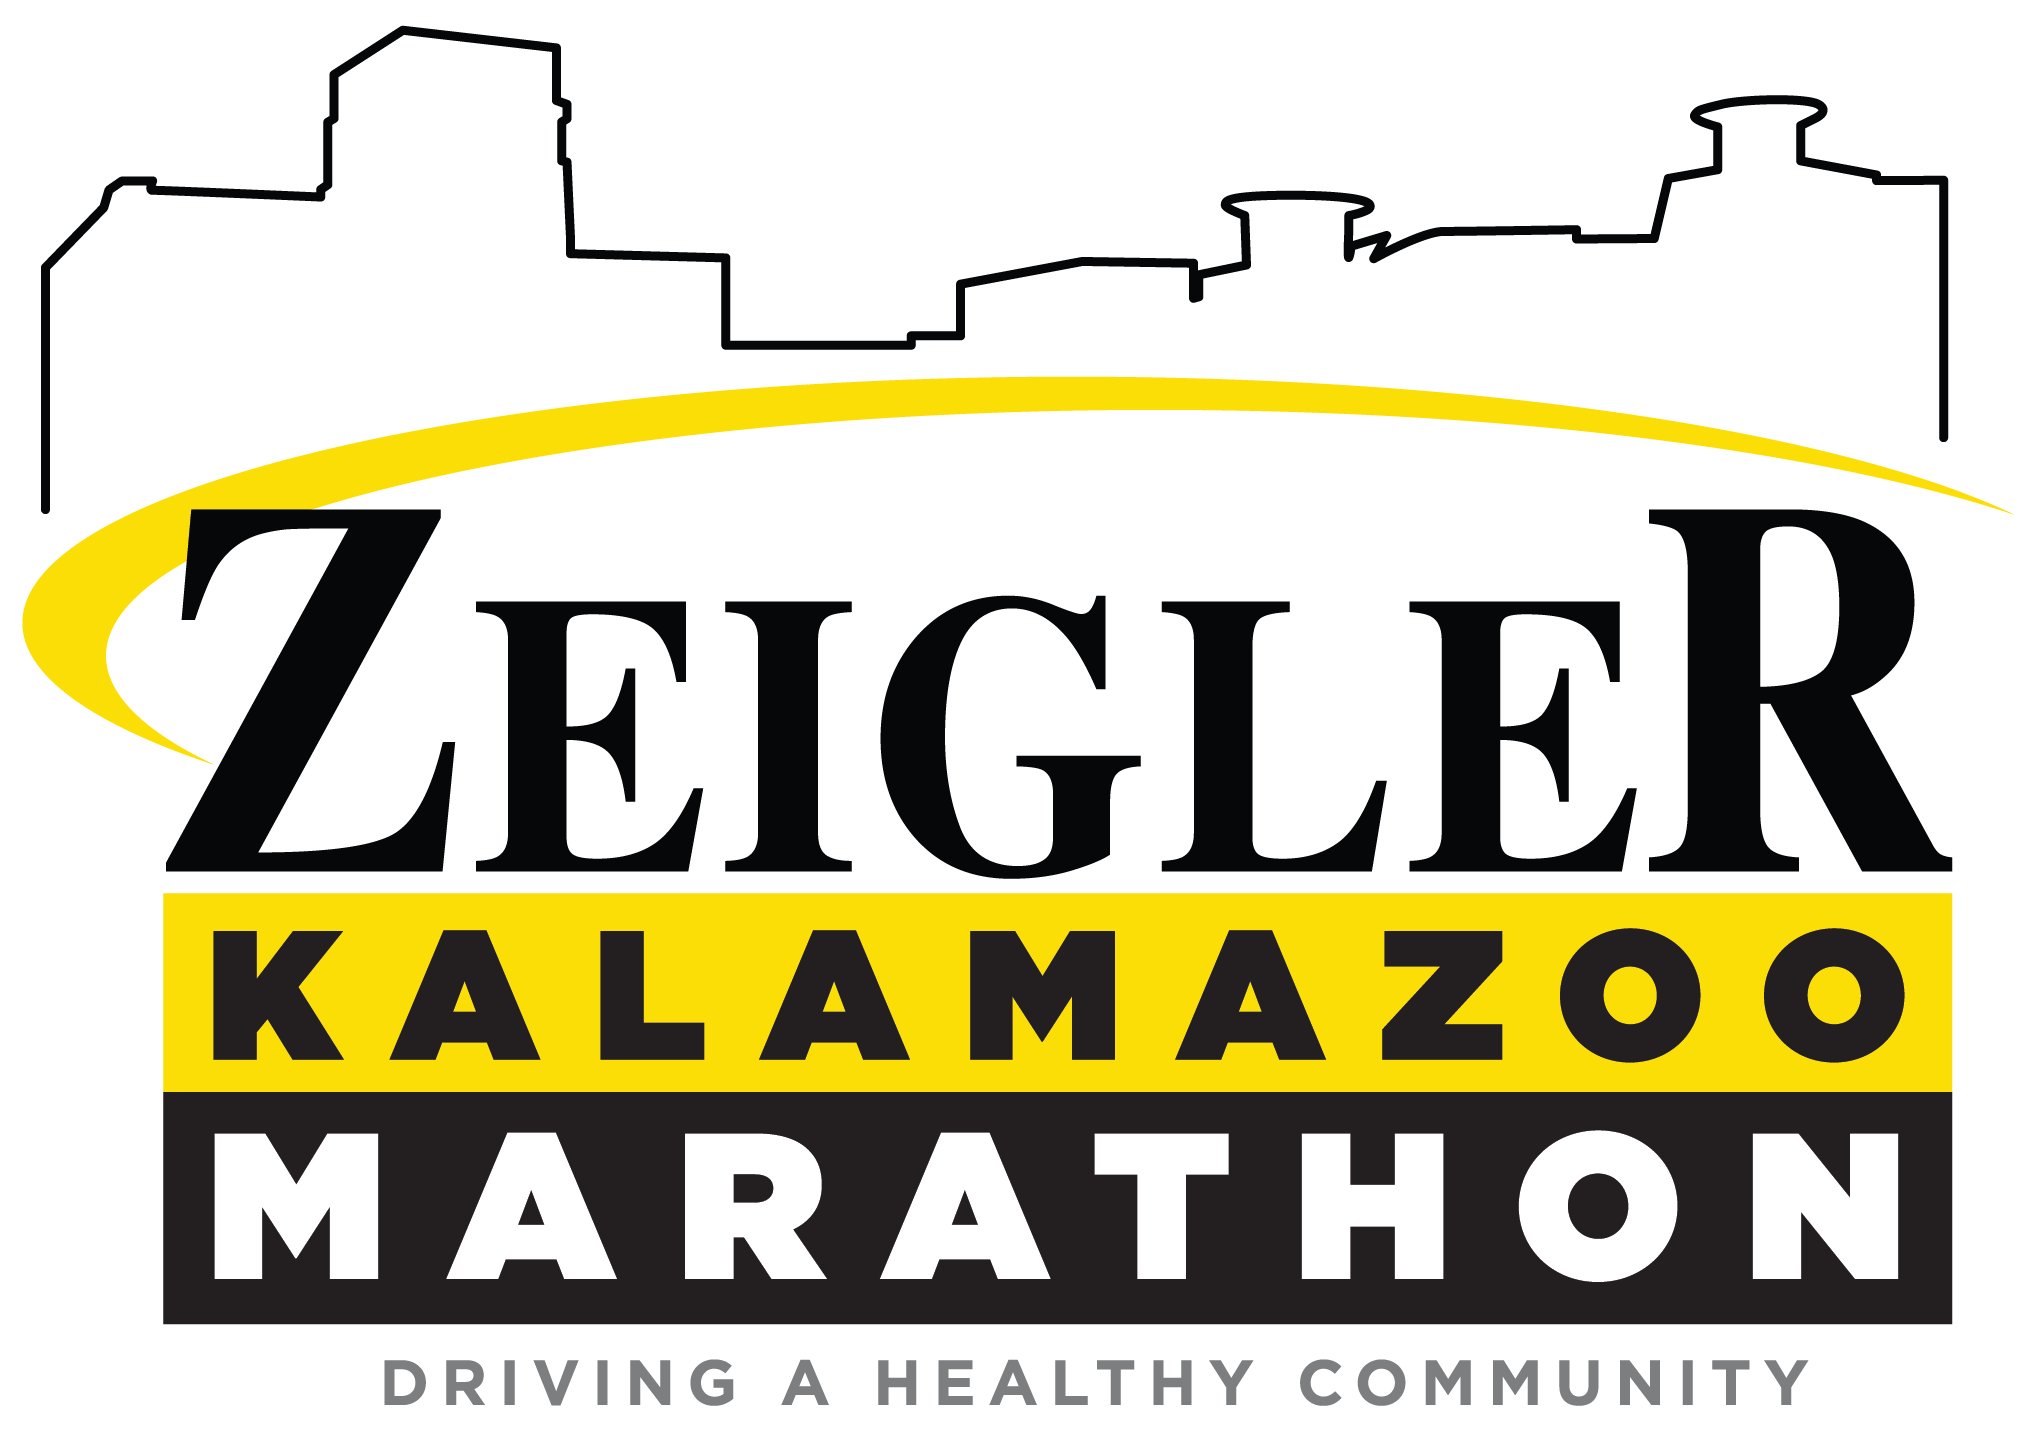 Zeigler Kalamazoo Marathon - Driving A Healthy Community